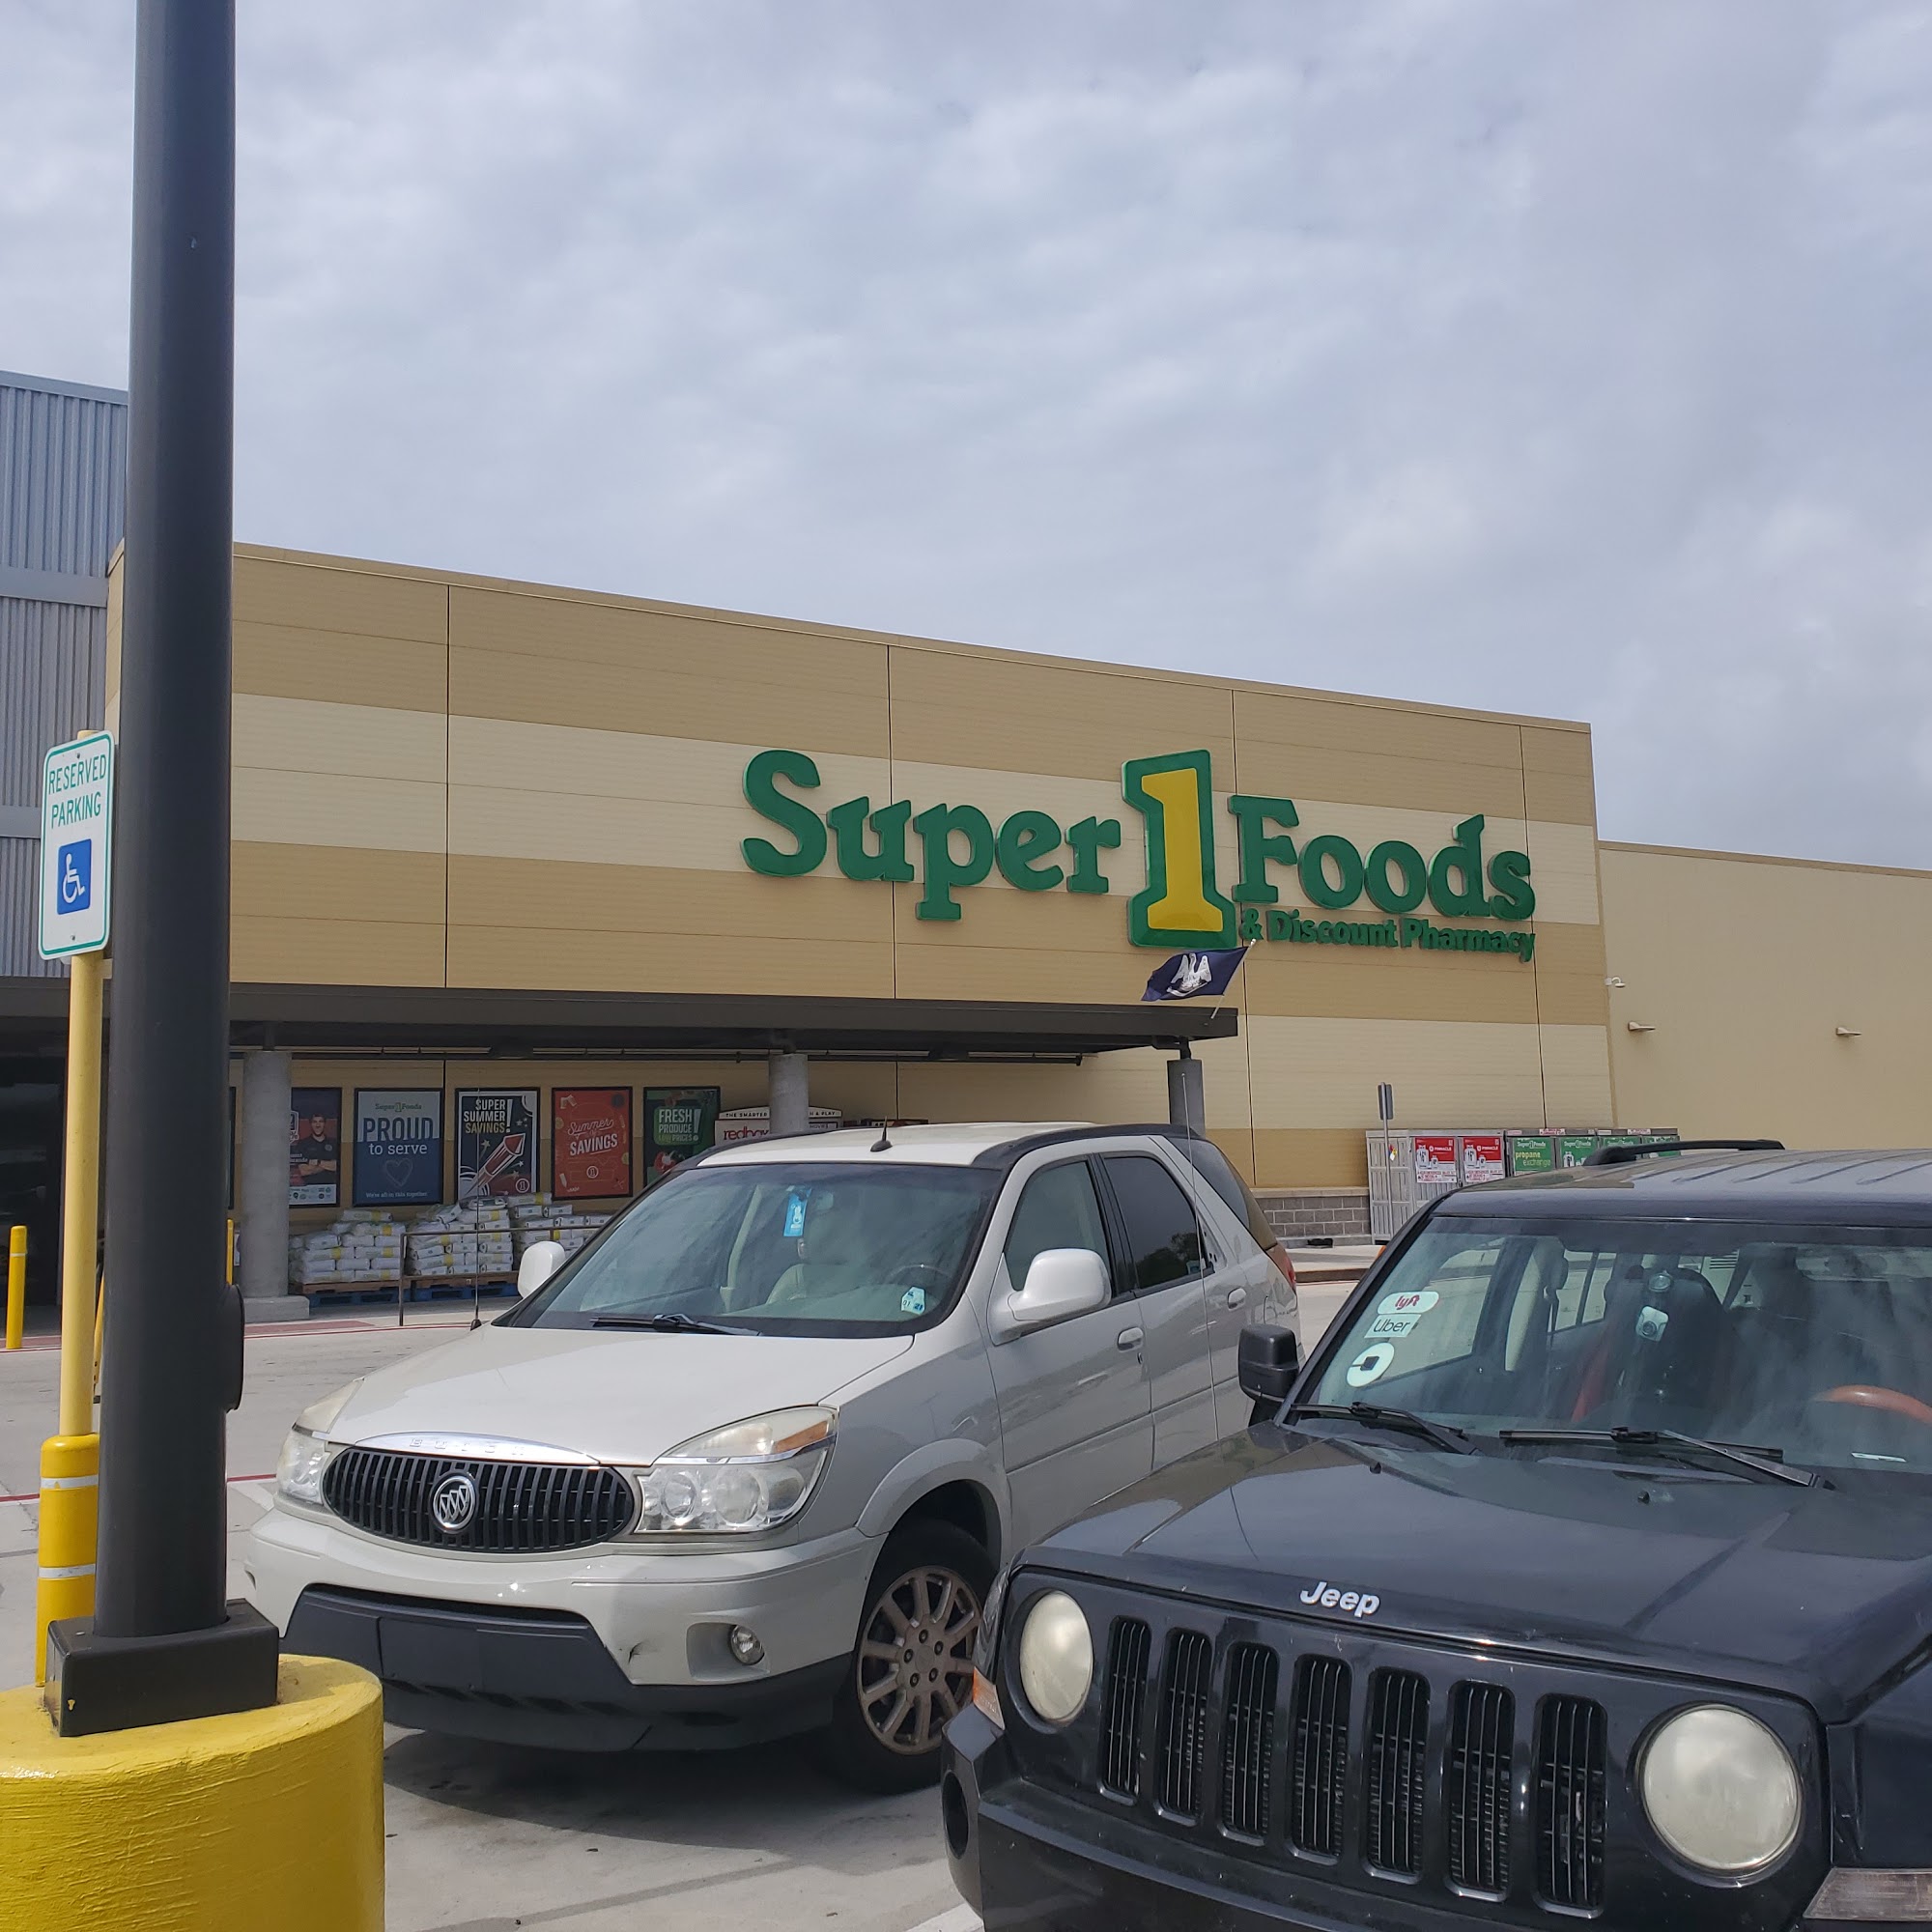 Super 1 Foods Fuel Center